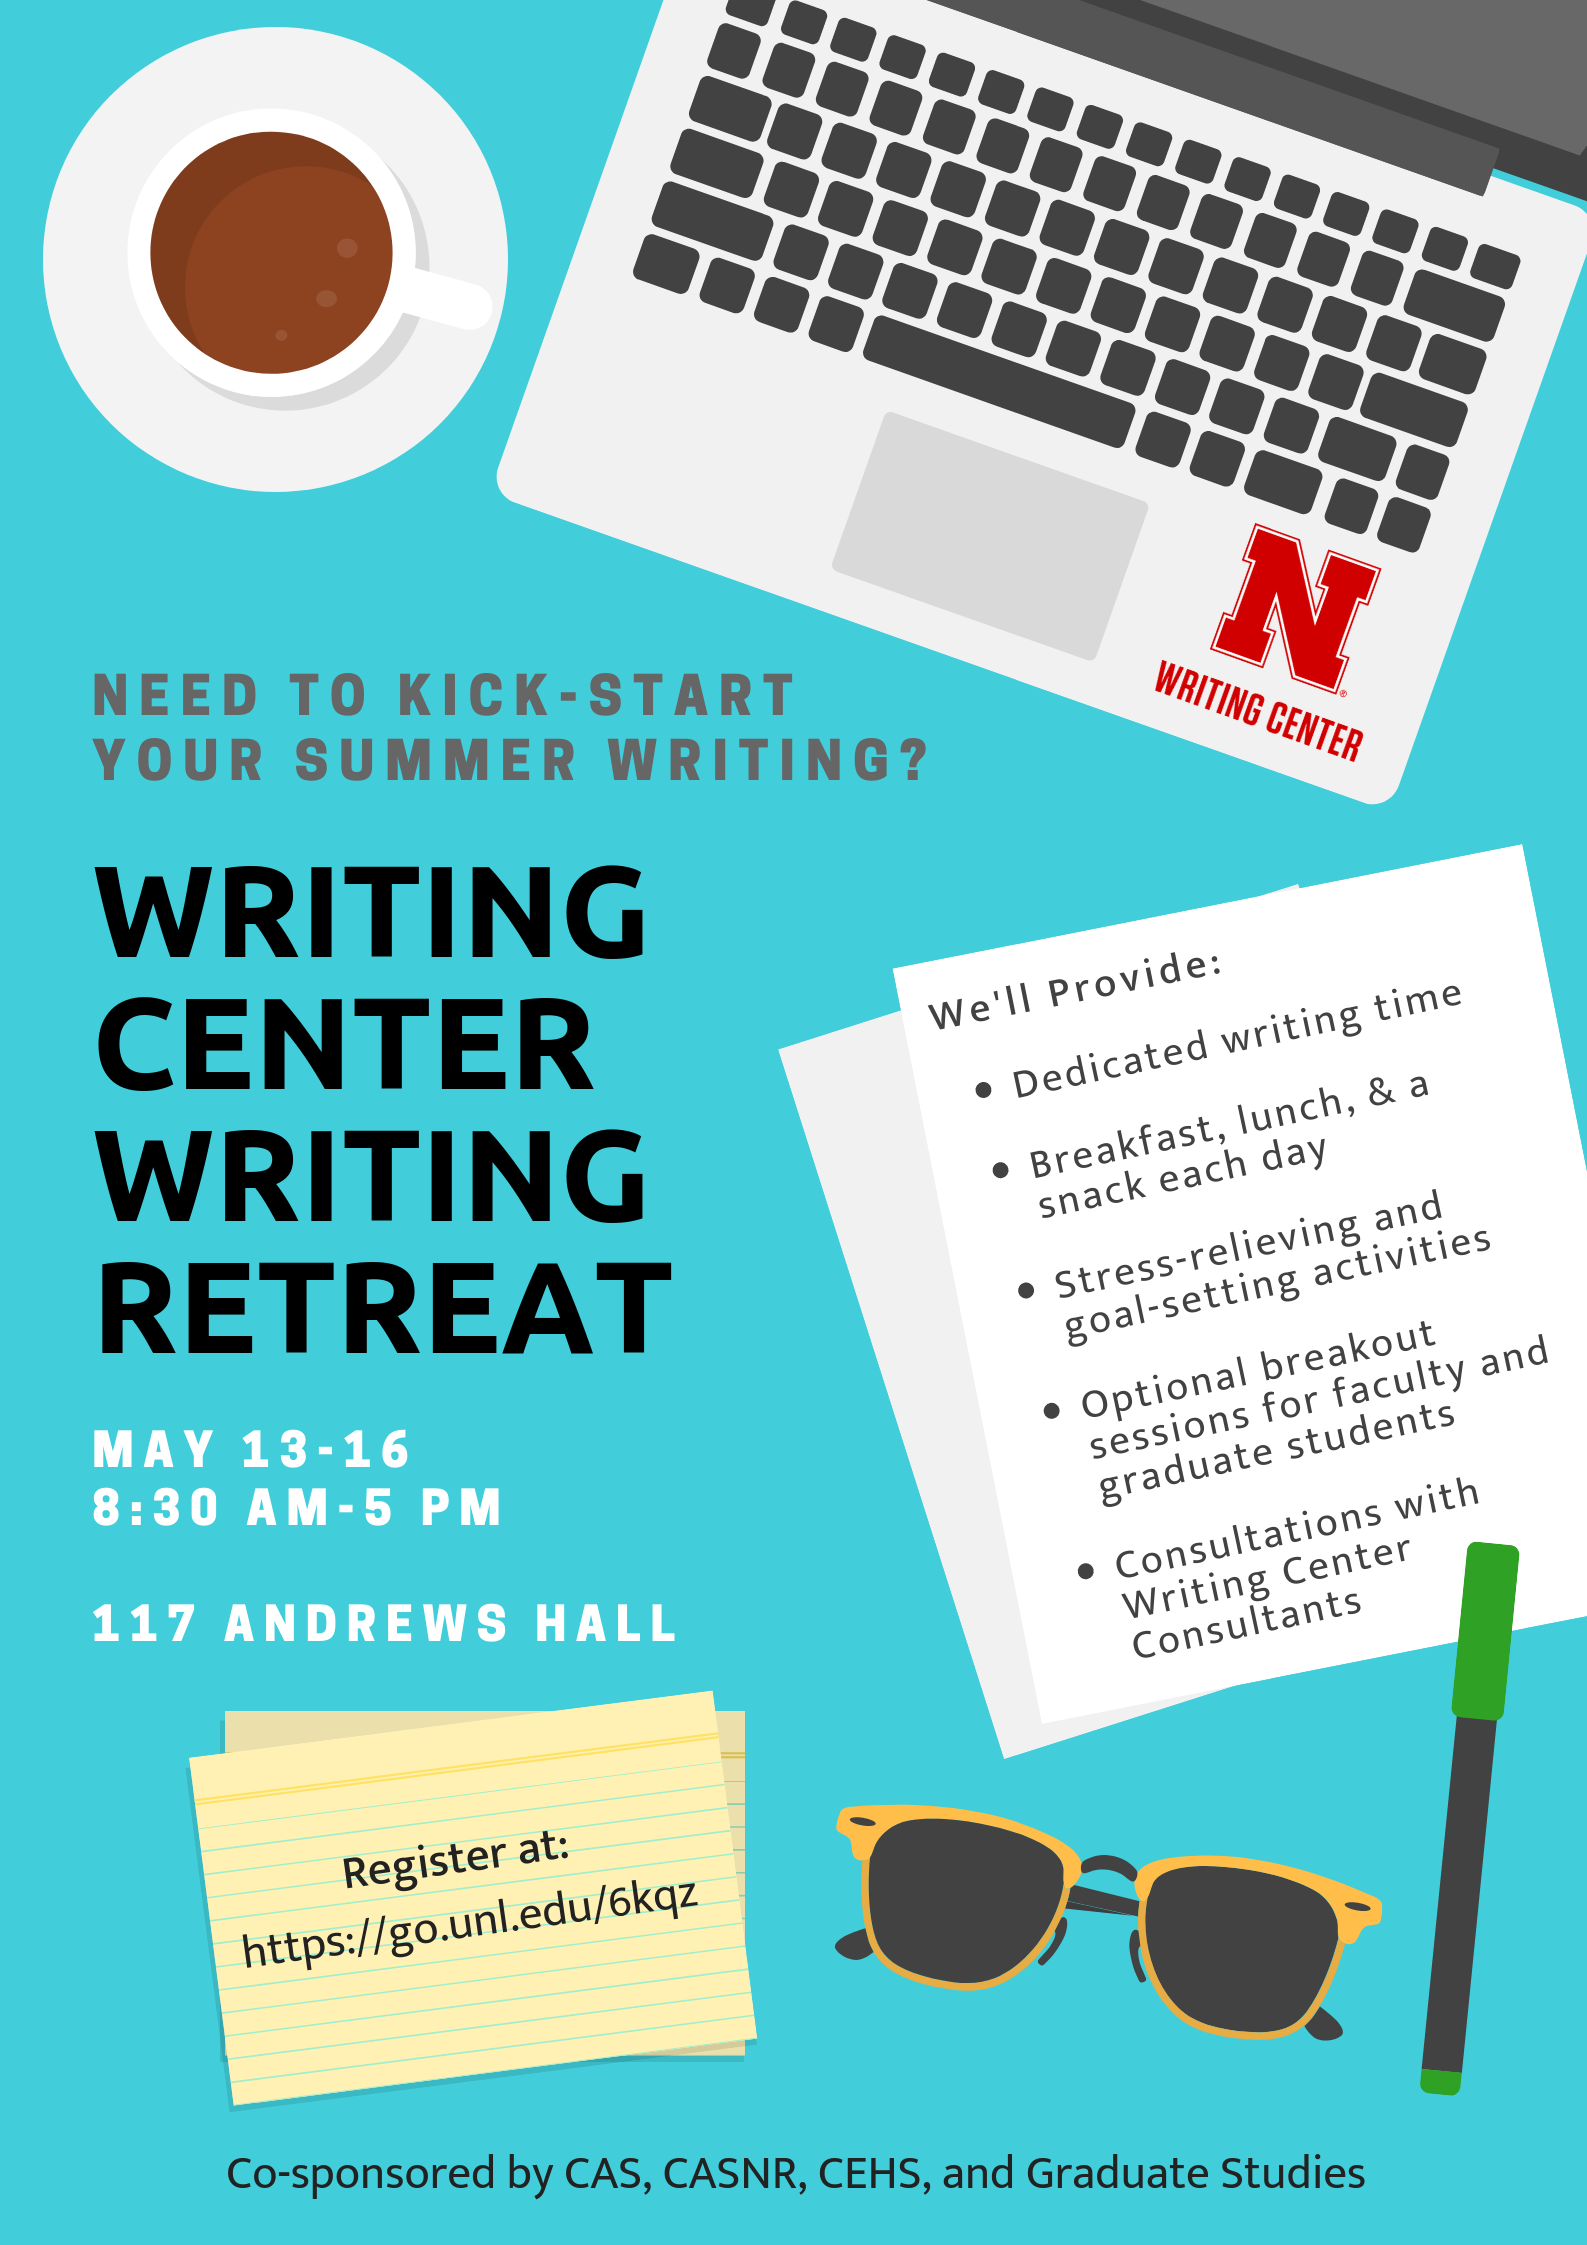 Writing Center Writing Retreat 2019.png